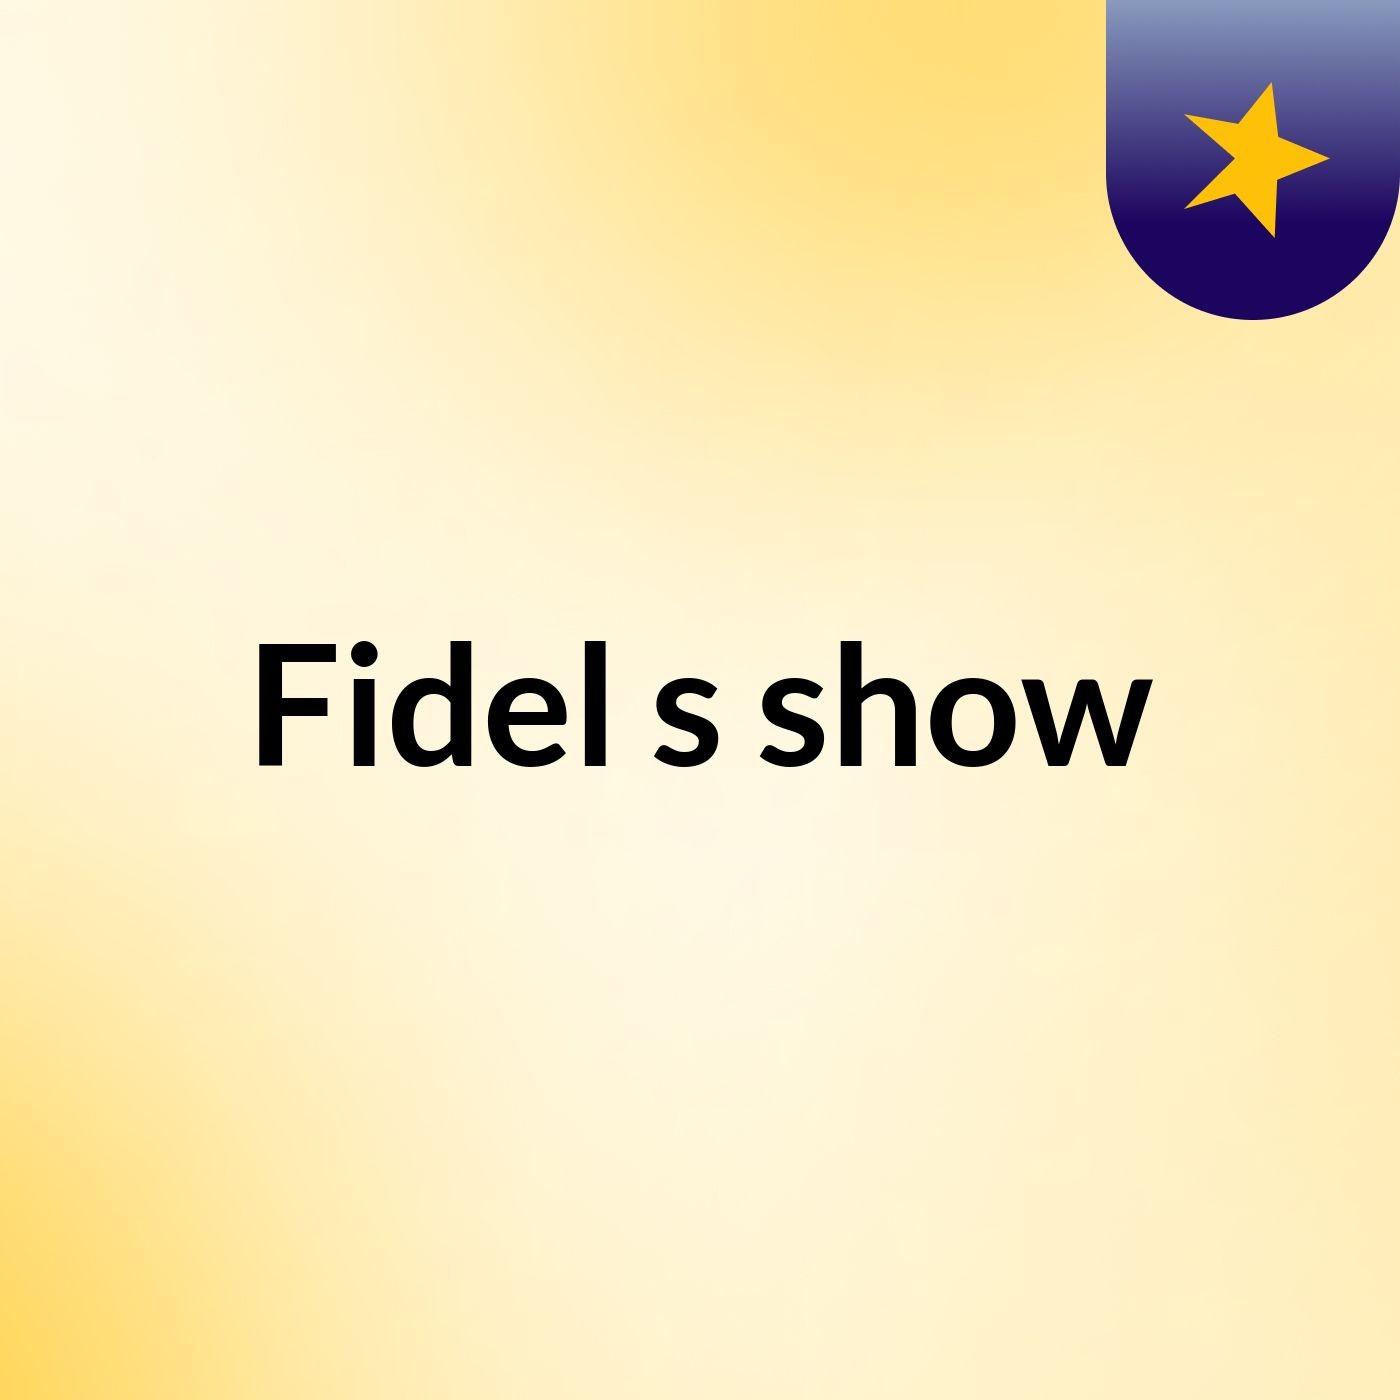 Fidel's show